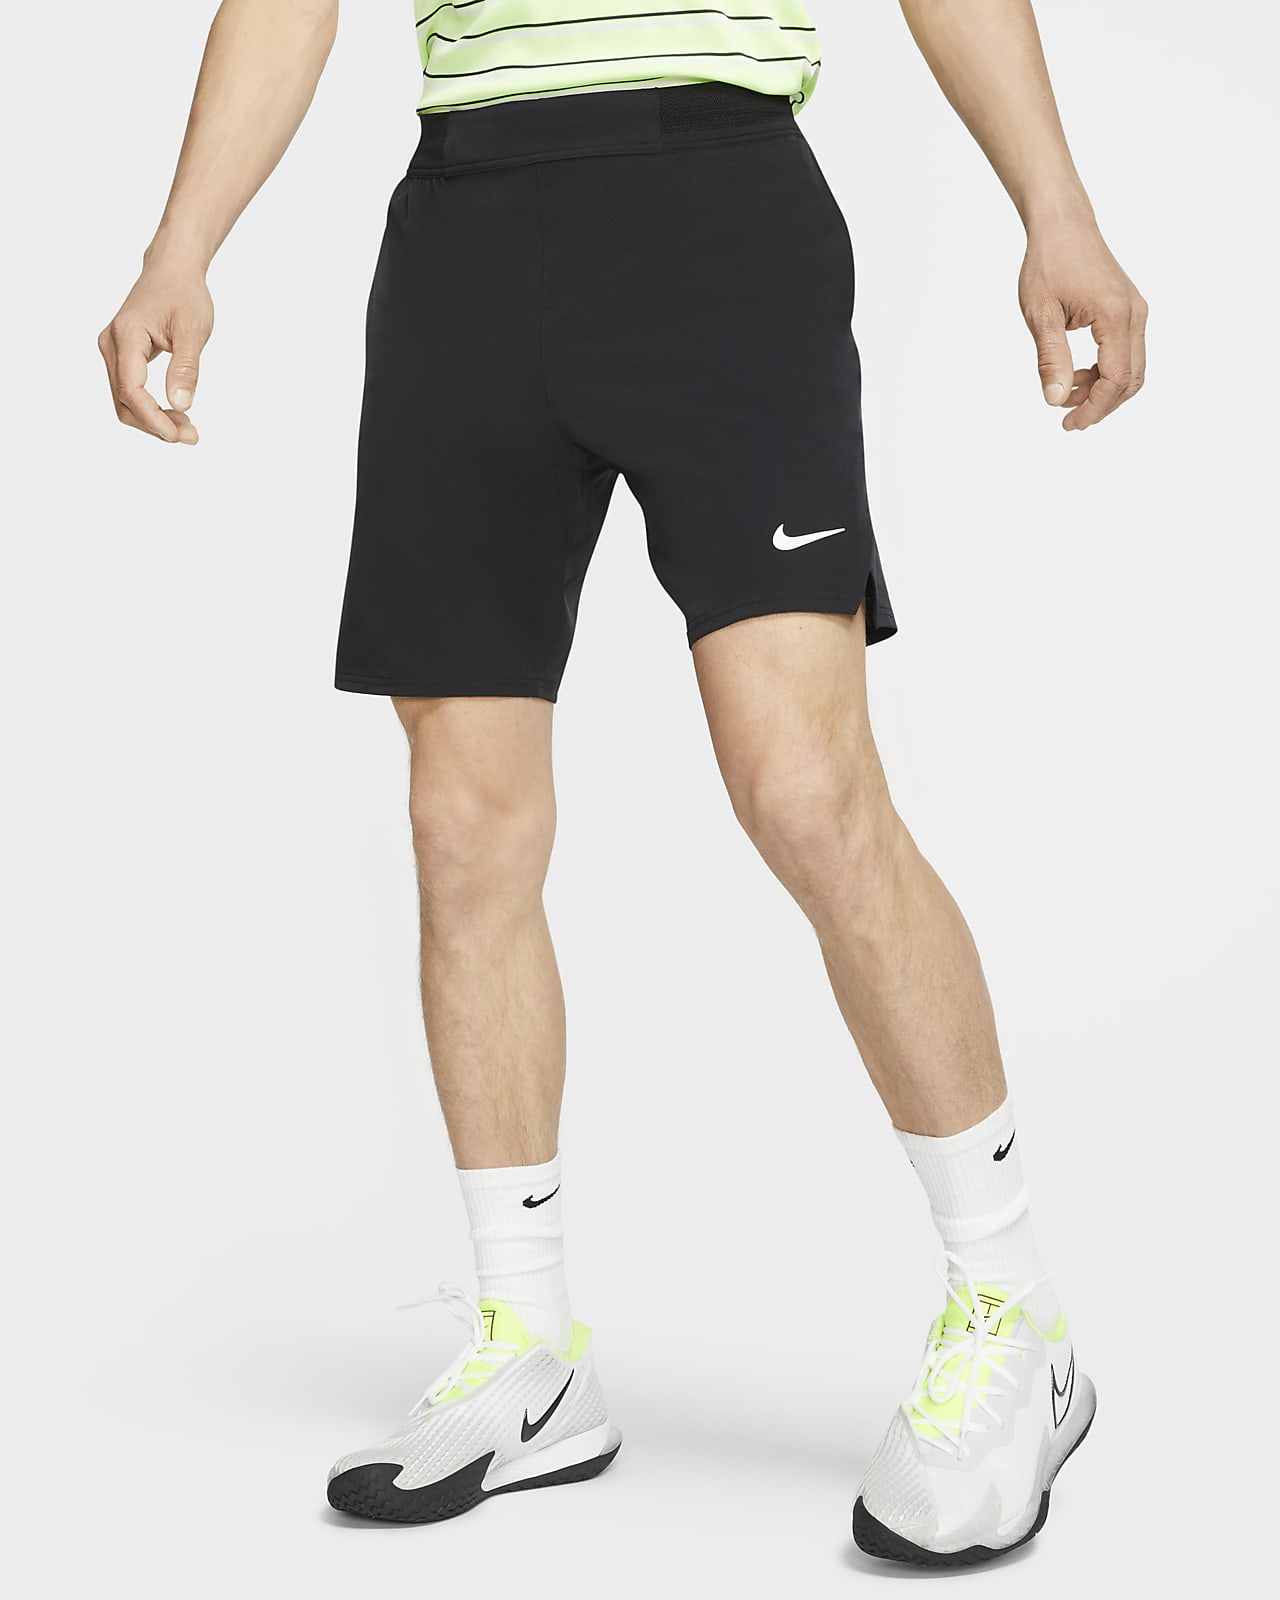 nike tennis flex shorts